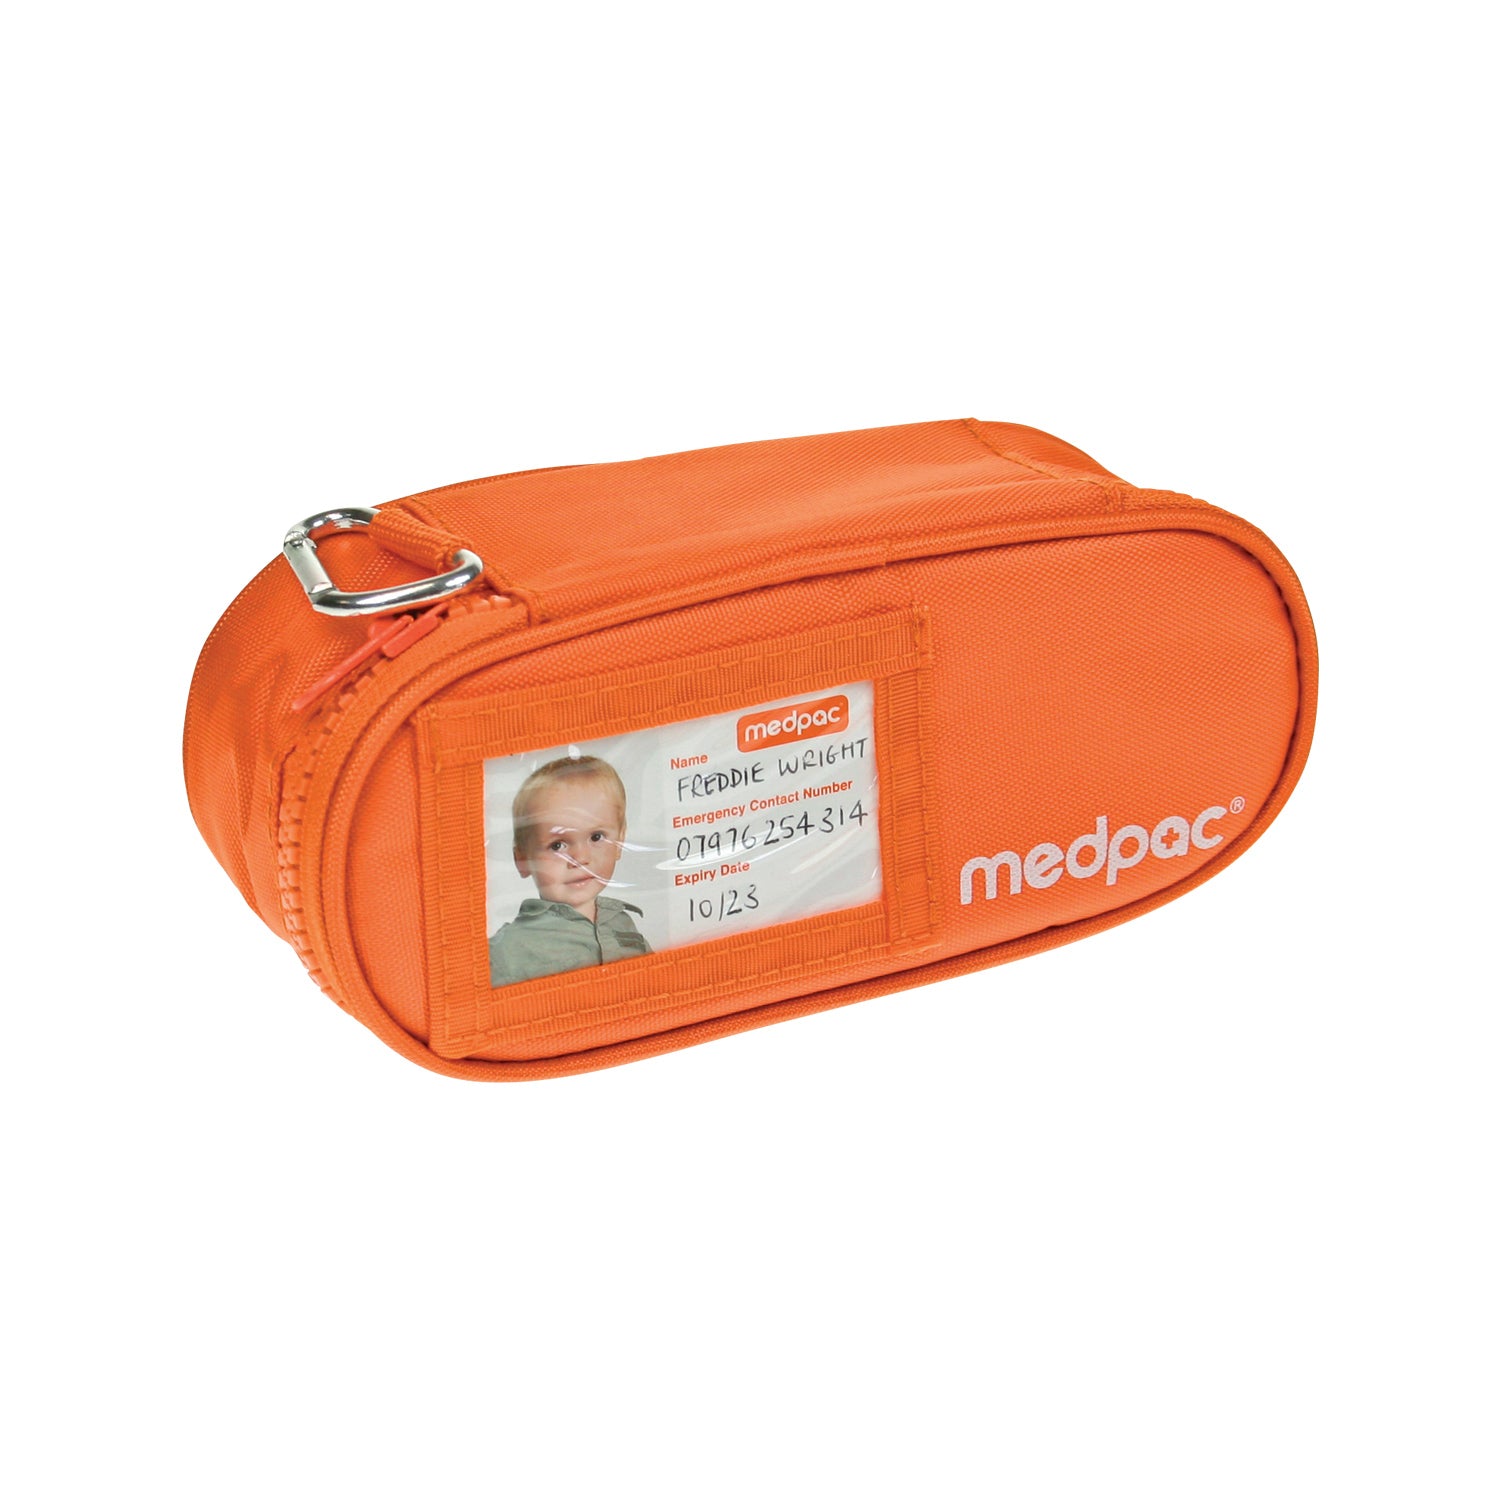 Amazon.com: MedPac Raincover for Medpac Bag : Health & Household